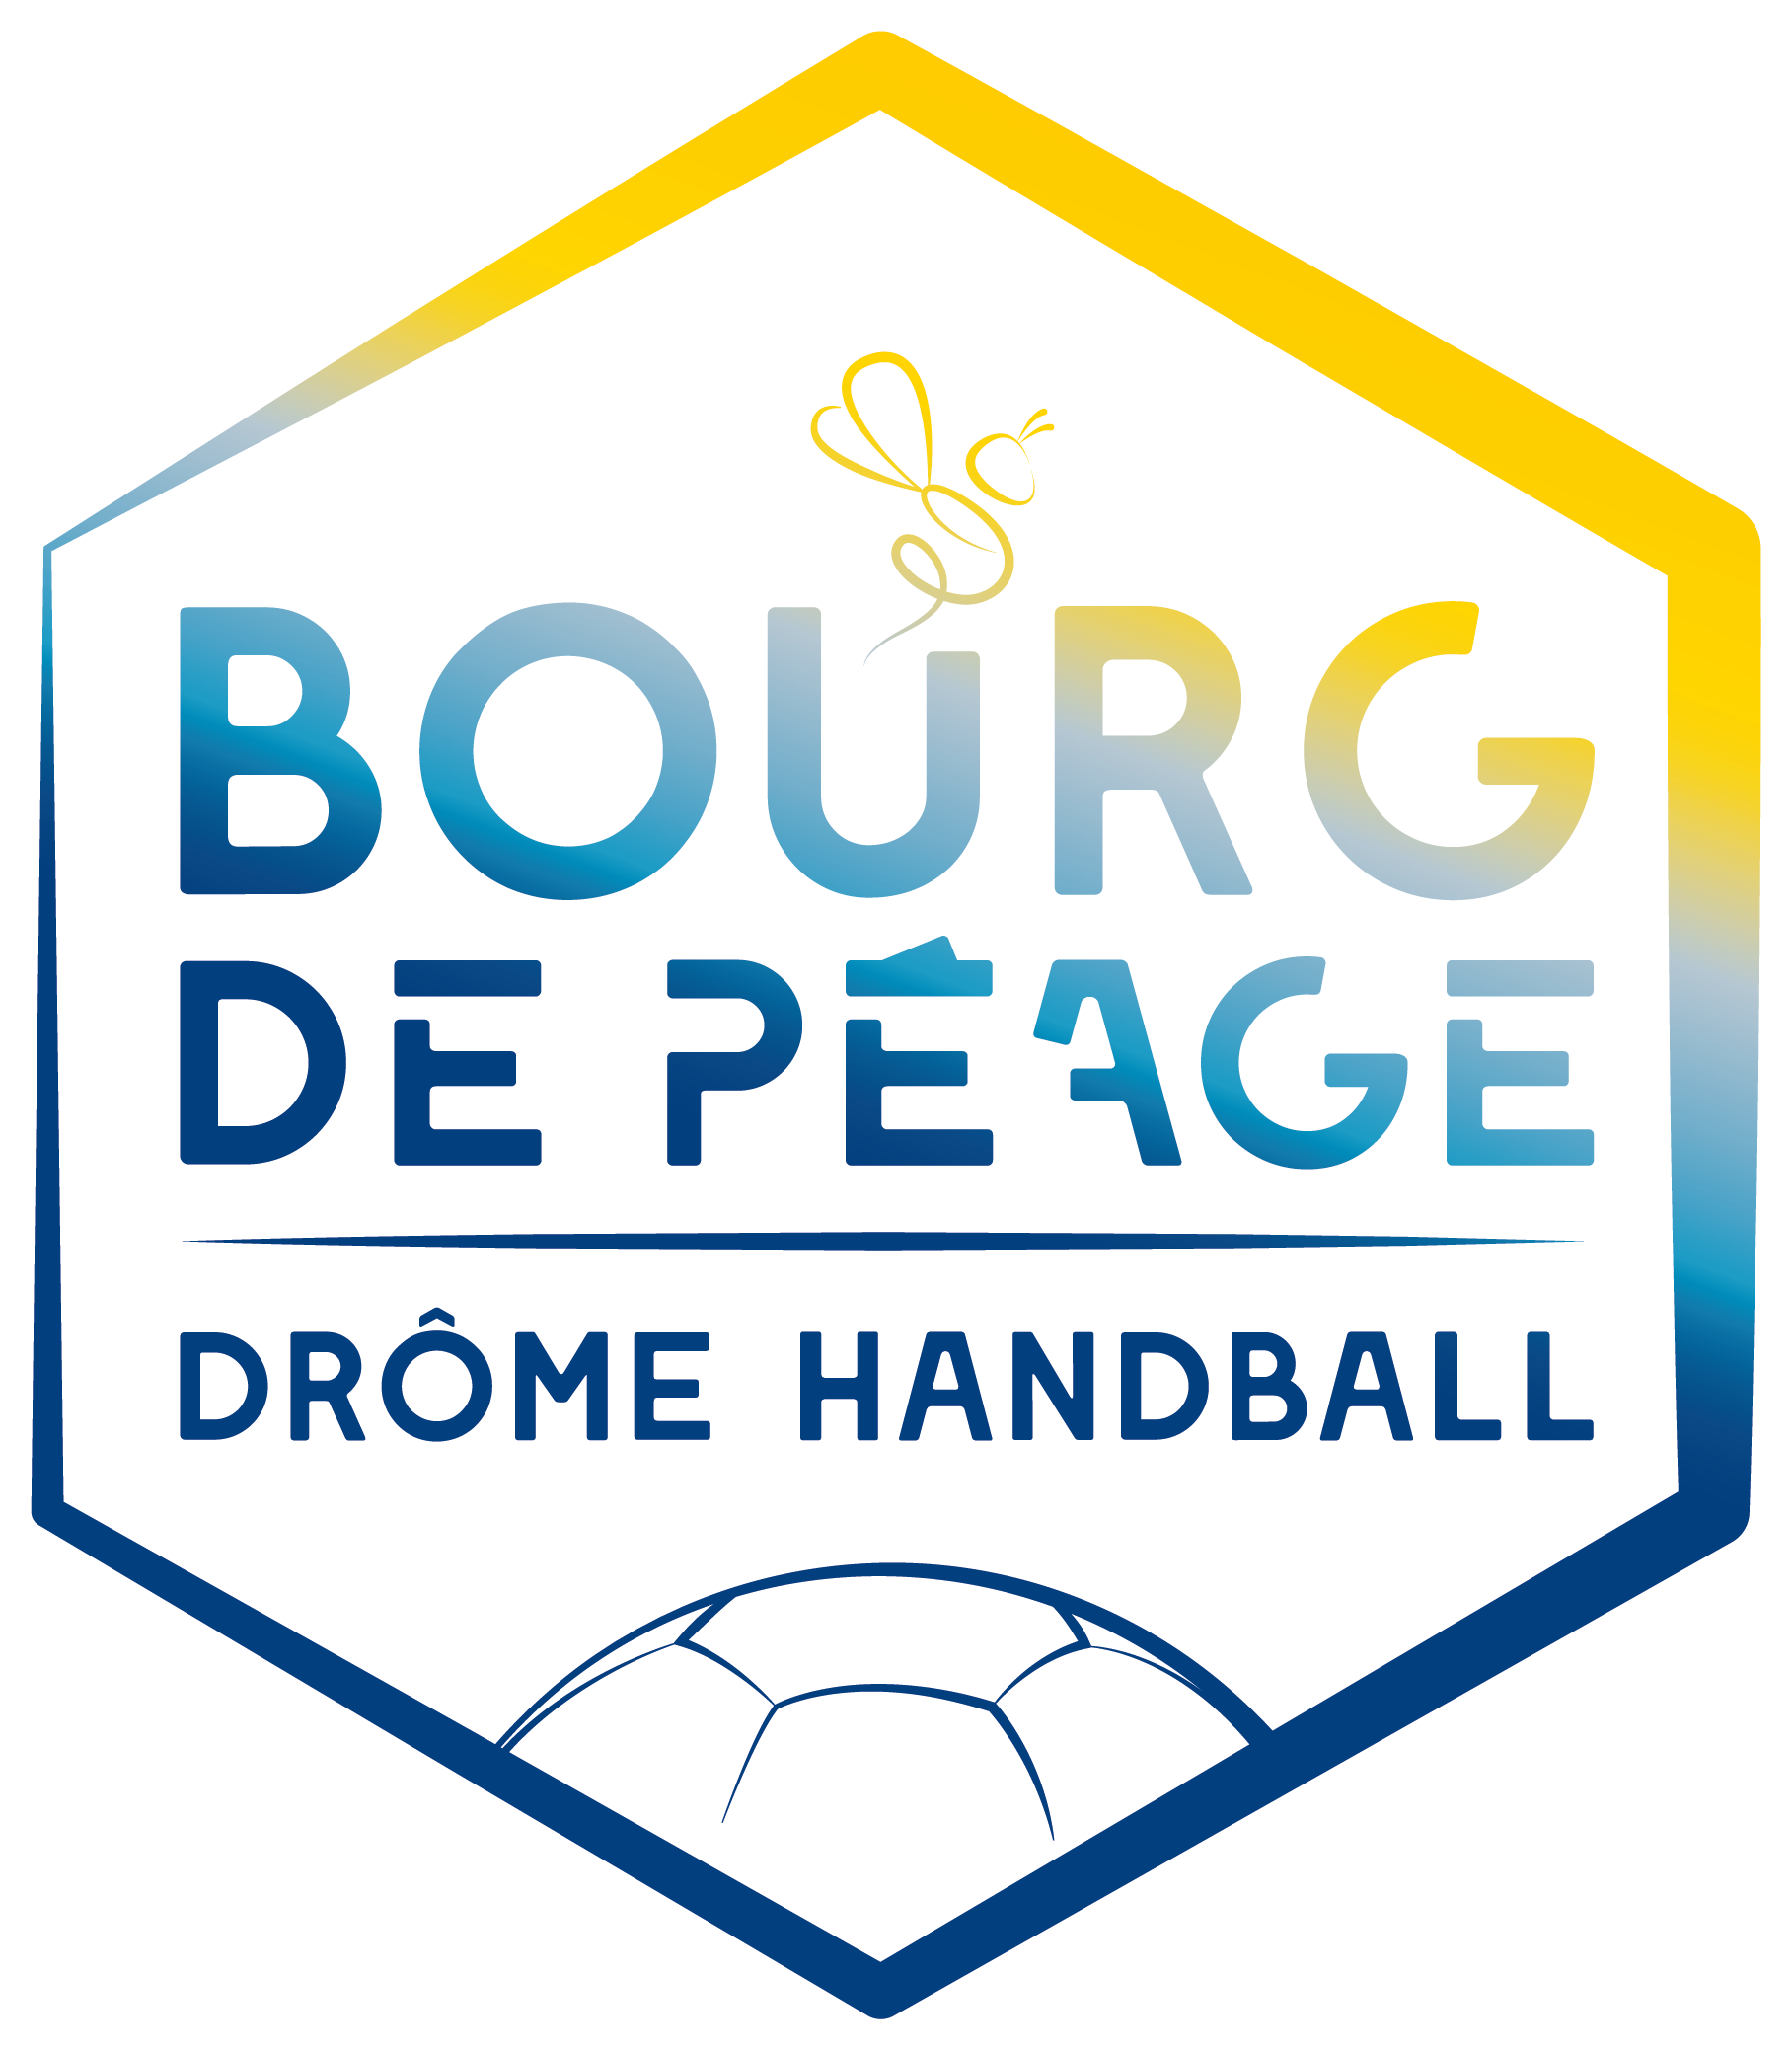 Drome Handball Bourg de Peage